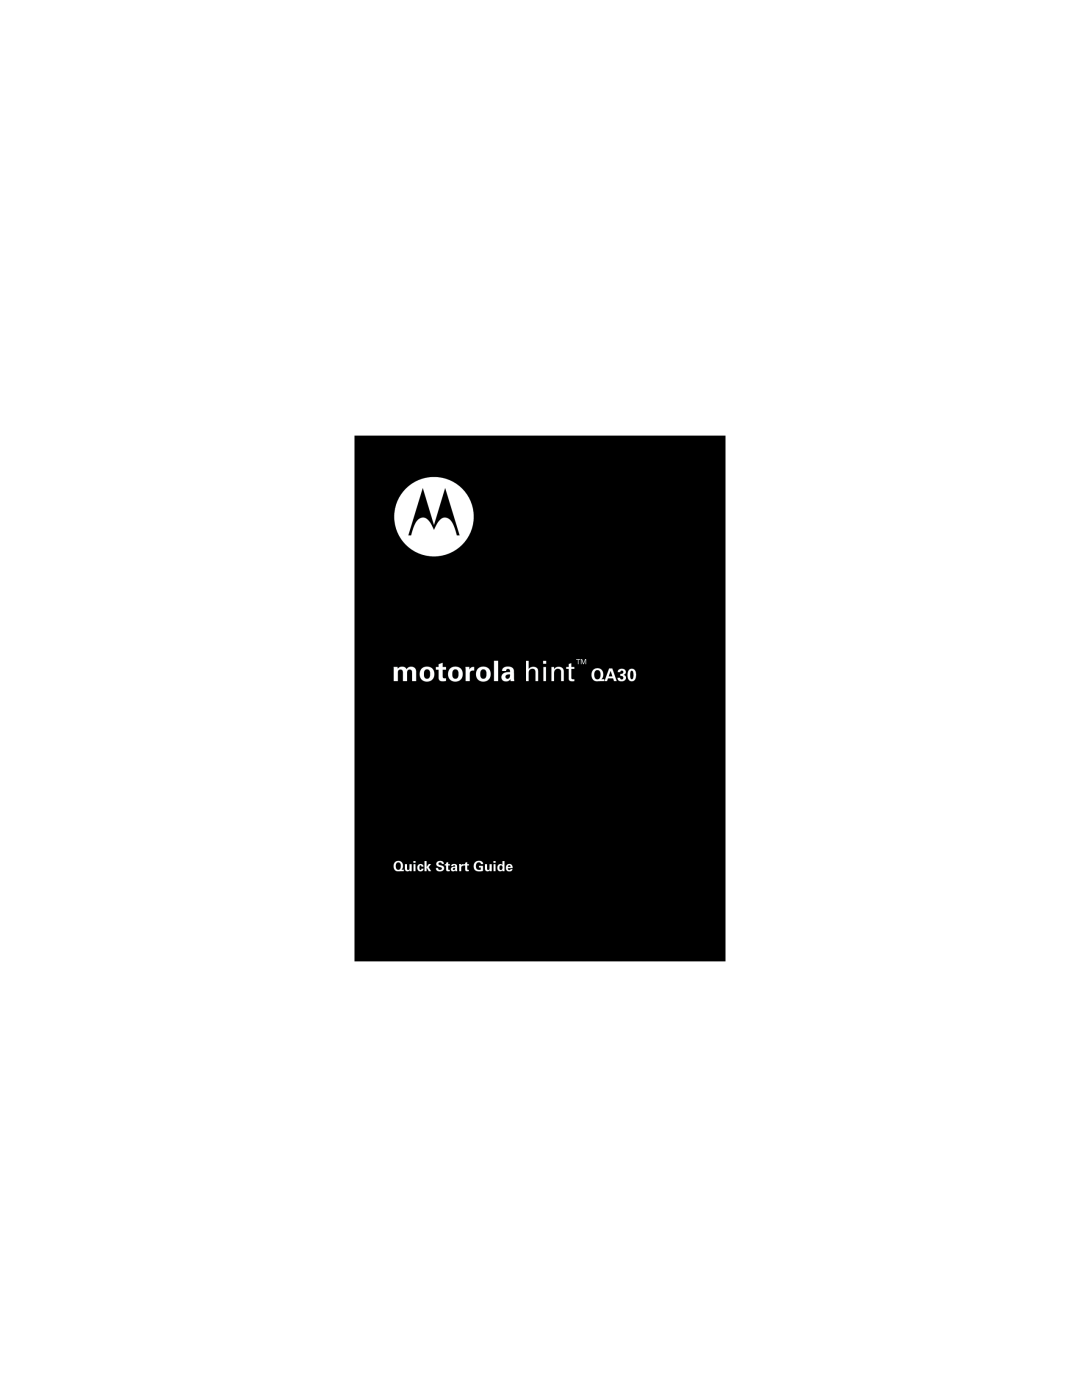 Motorola HINT QA30 quick start motorola hintTM QA30, Quick Start Guide 